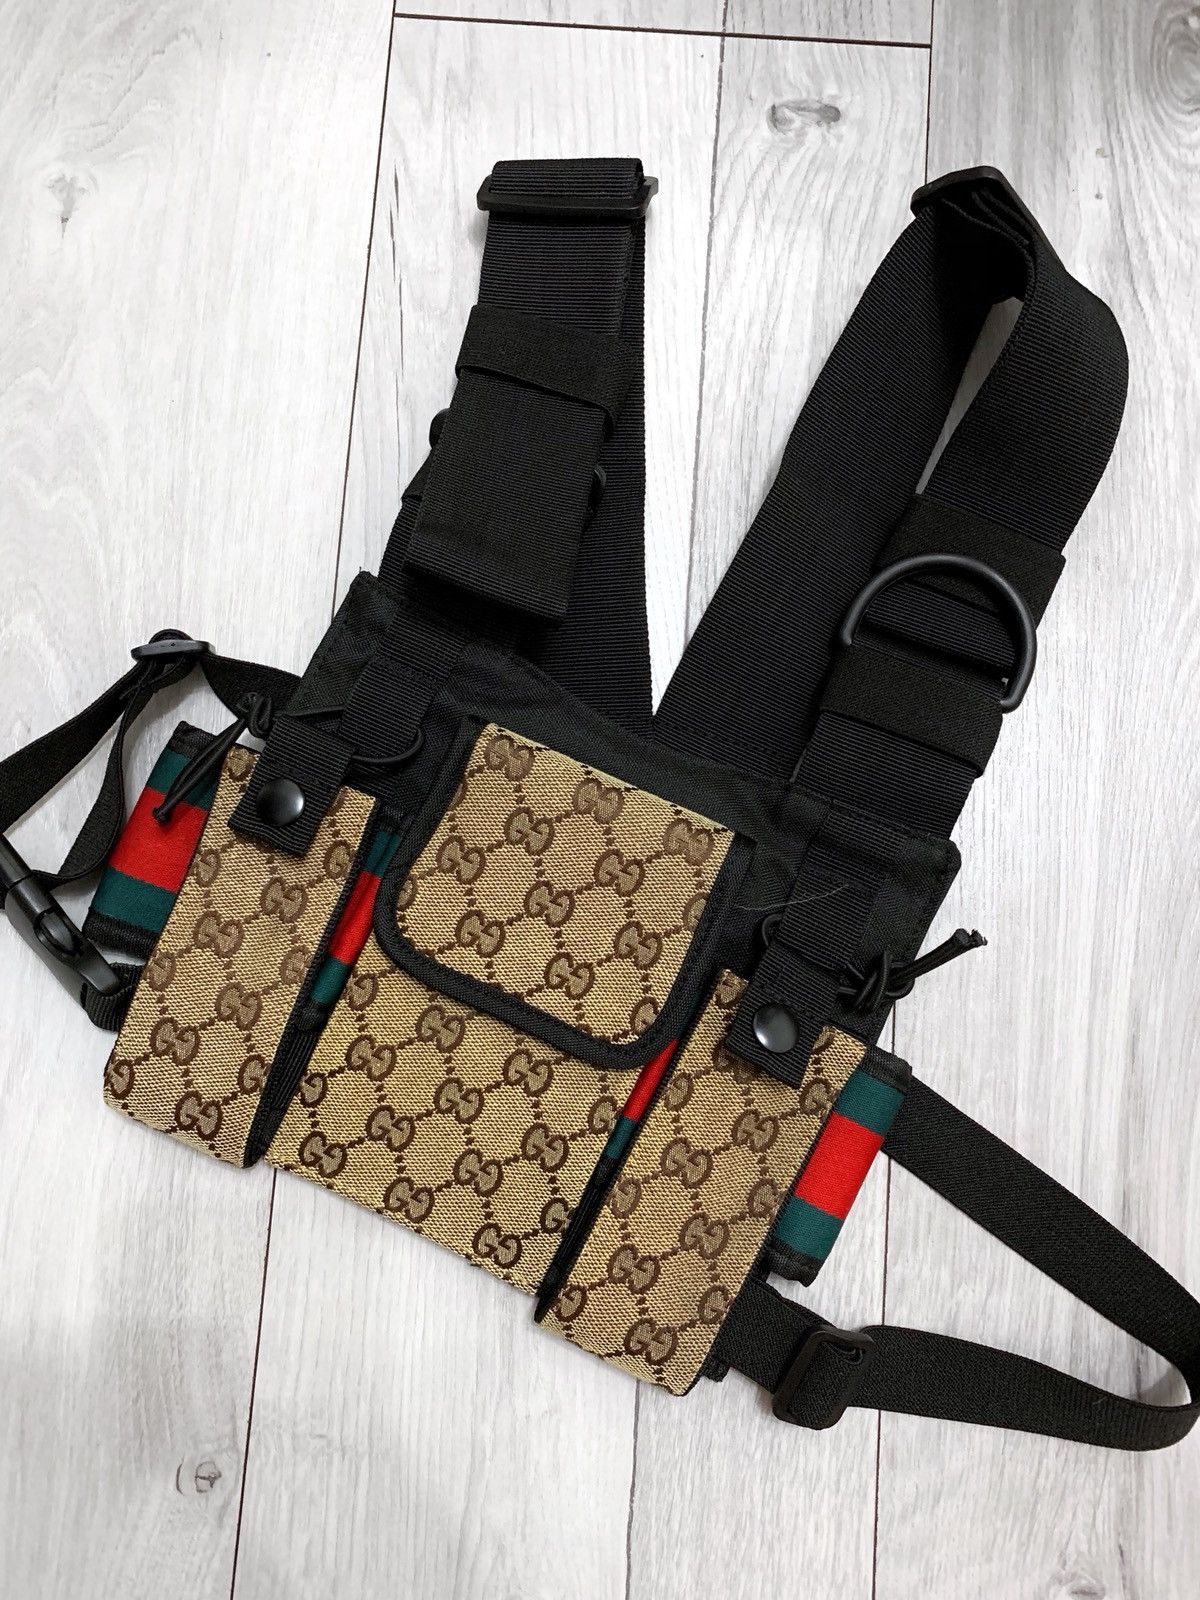 Gucci Chest Bag 